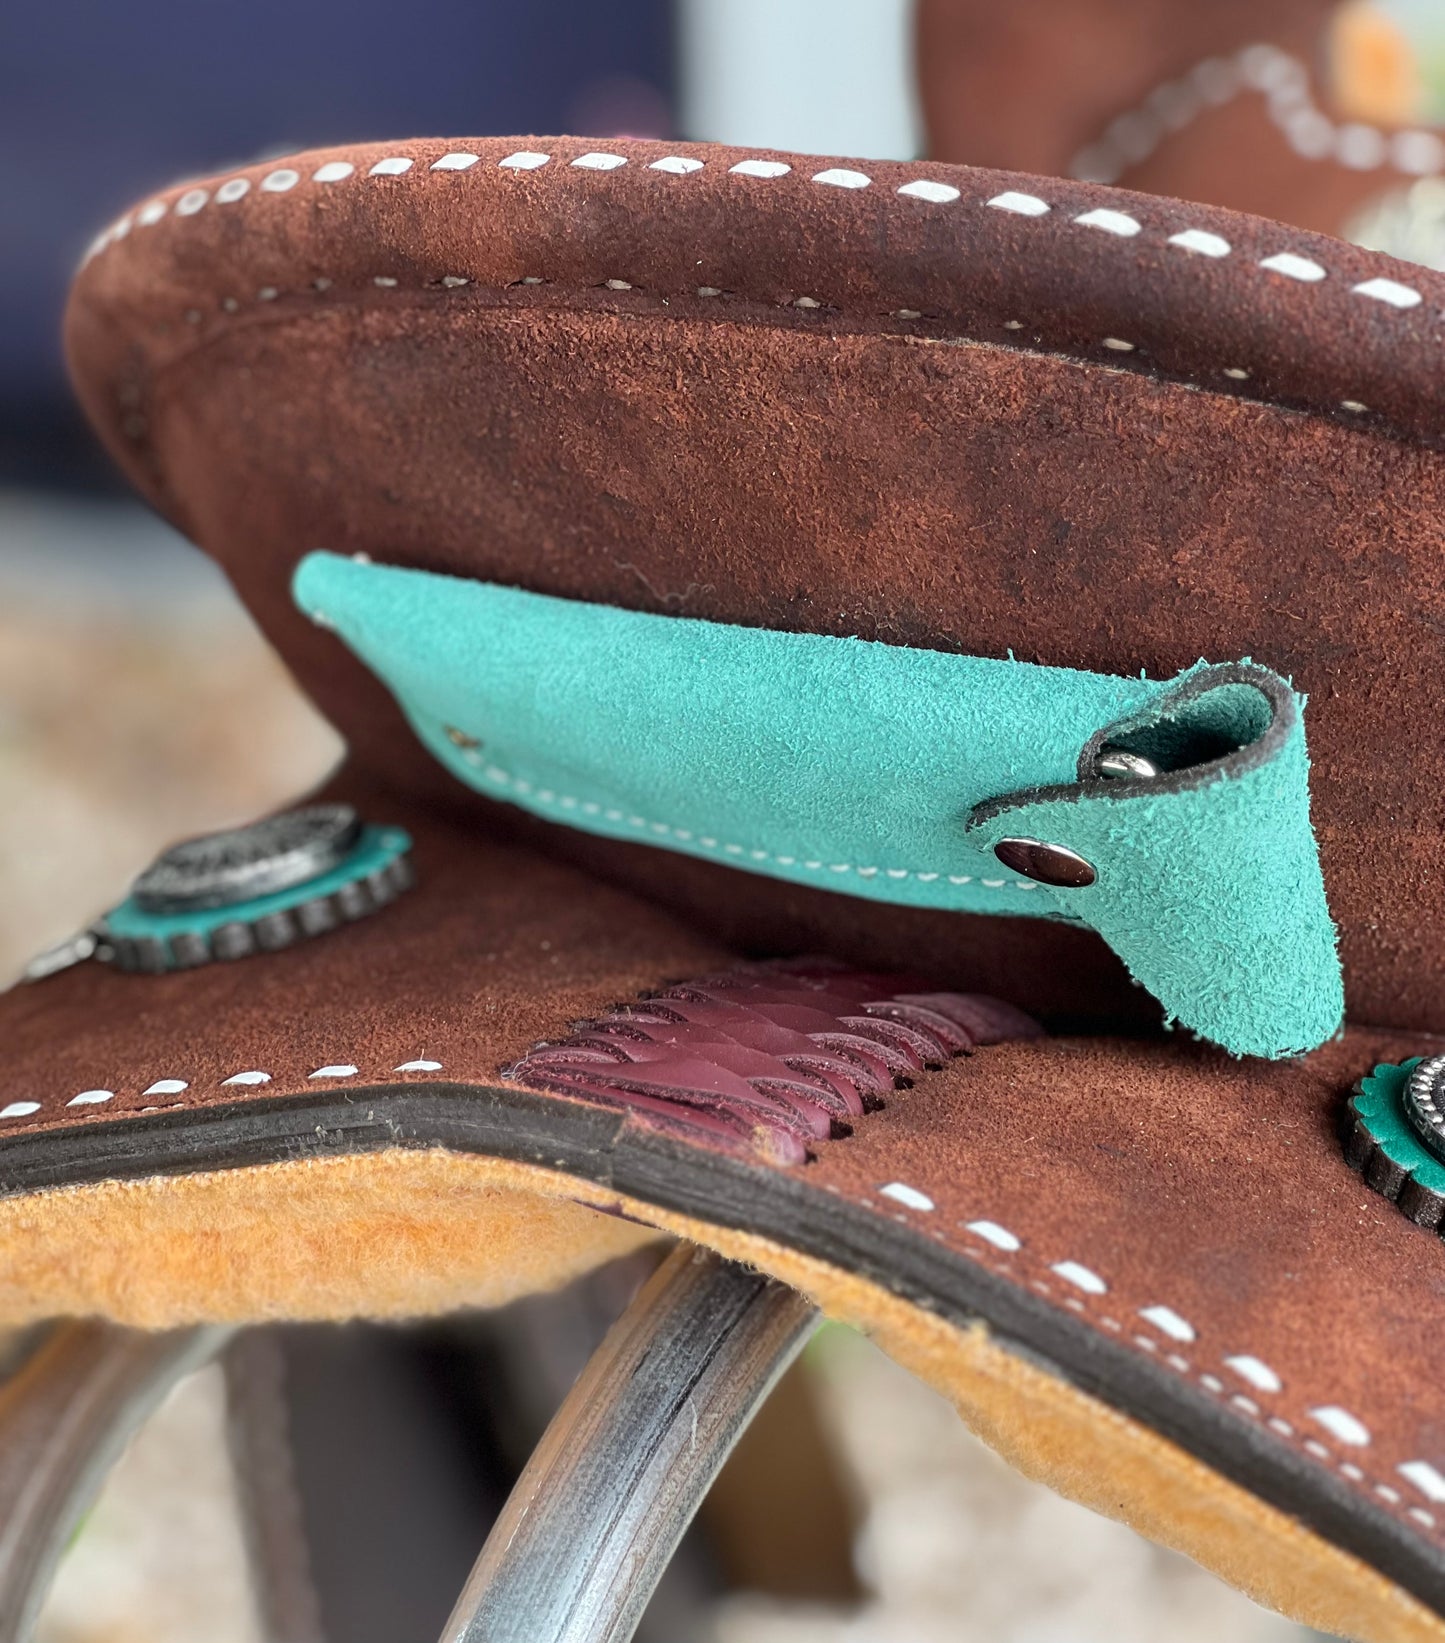 Turquoise Cowgirl Barrel Saddle